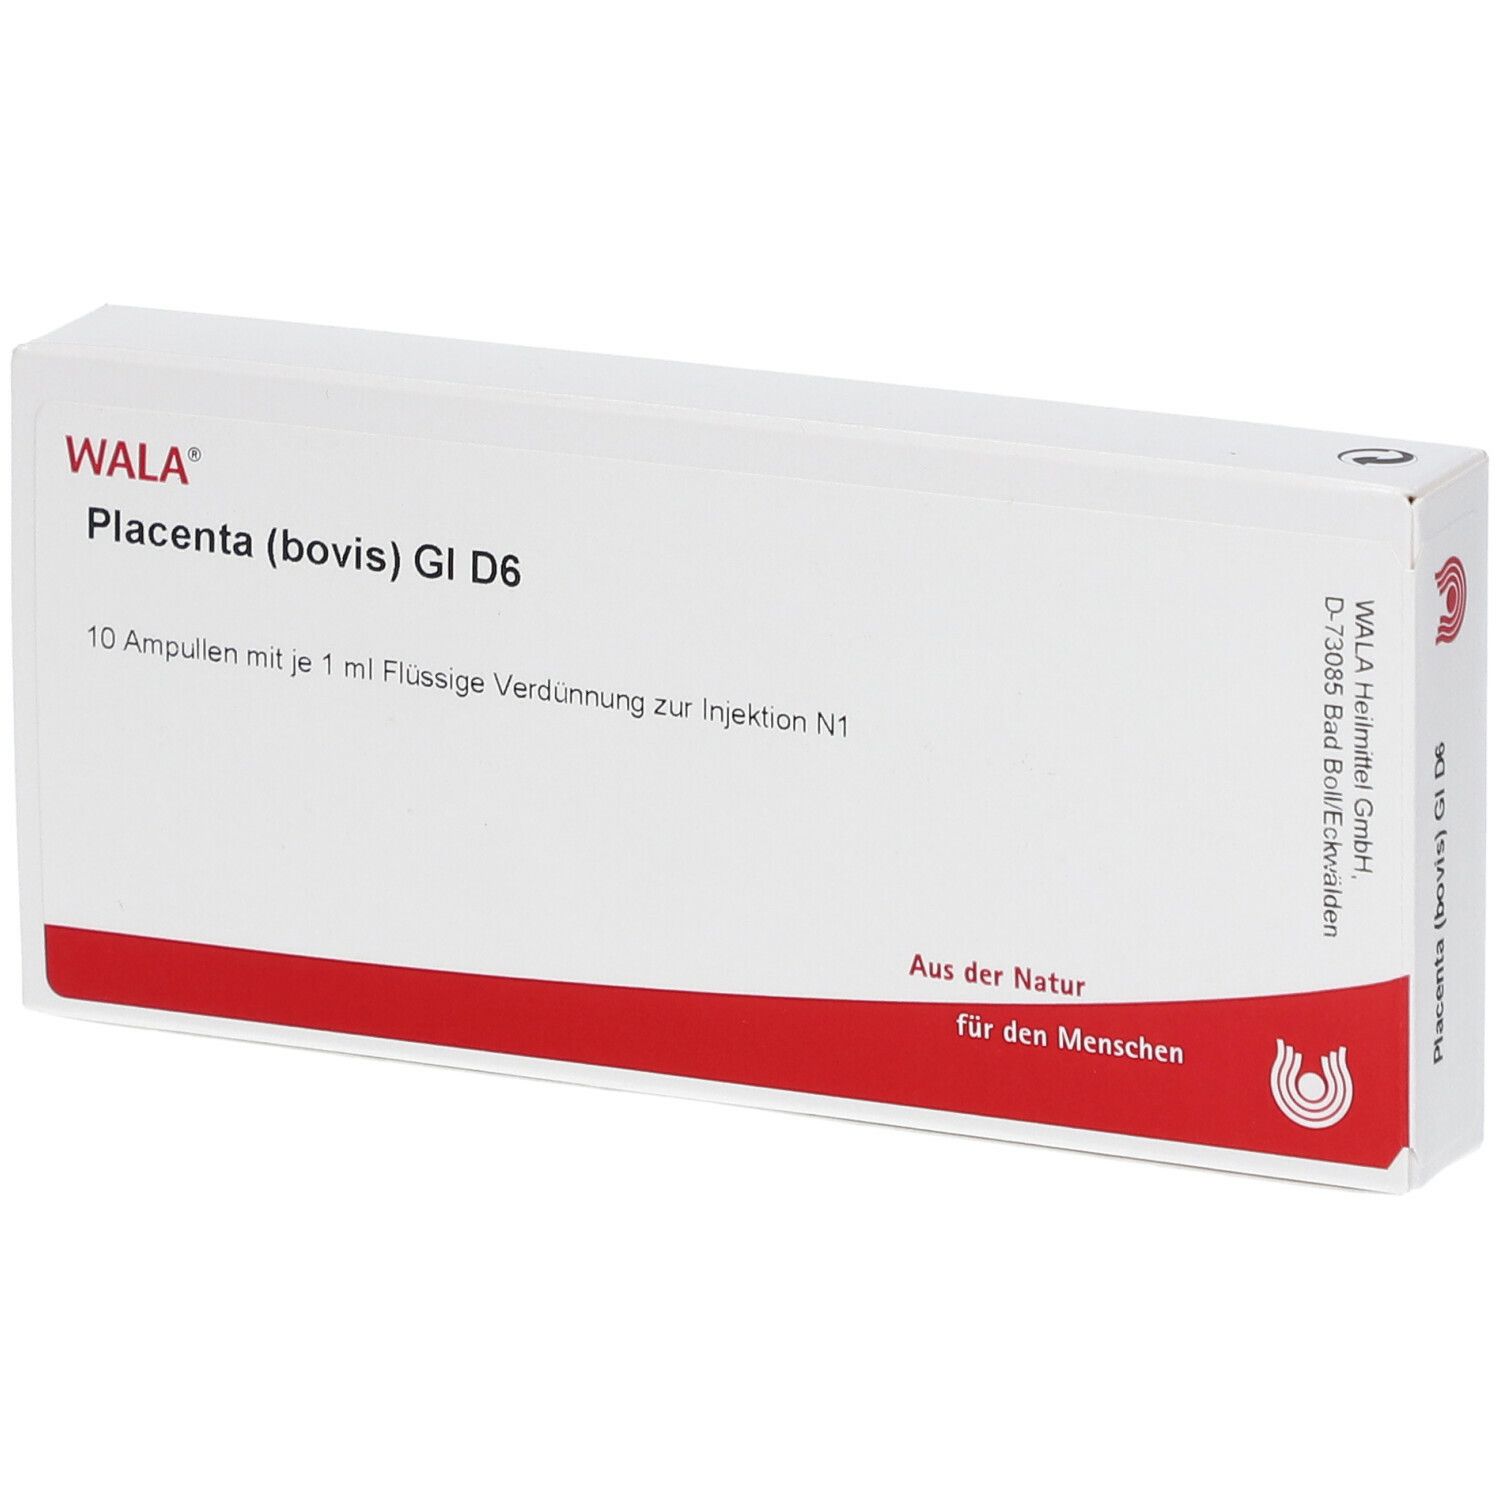 Wala® Placenta bovis Gl D 6